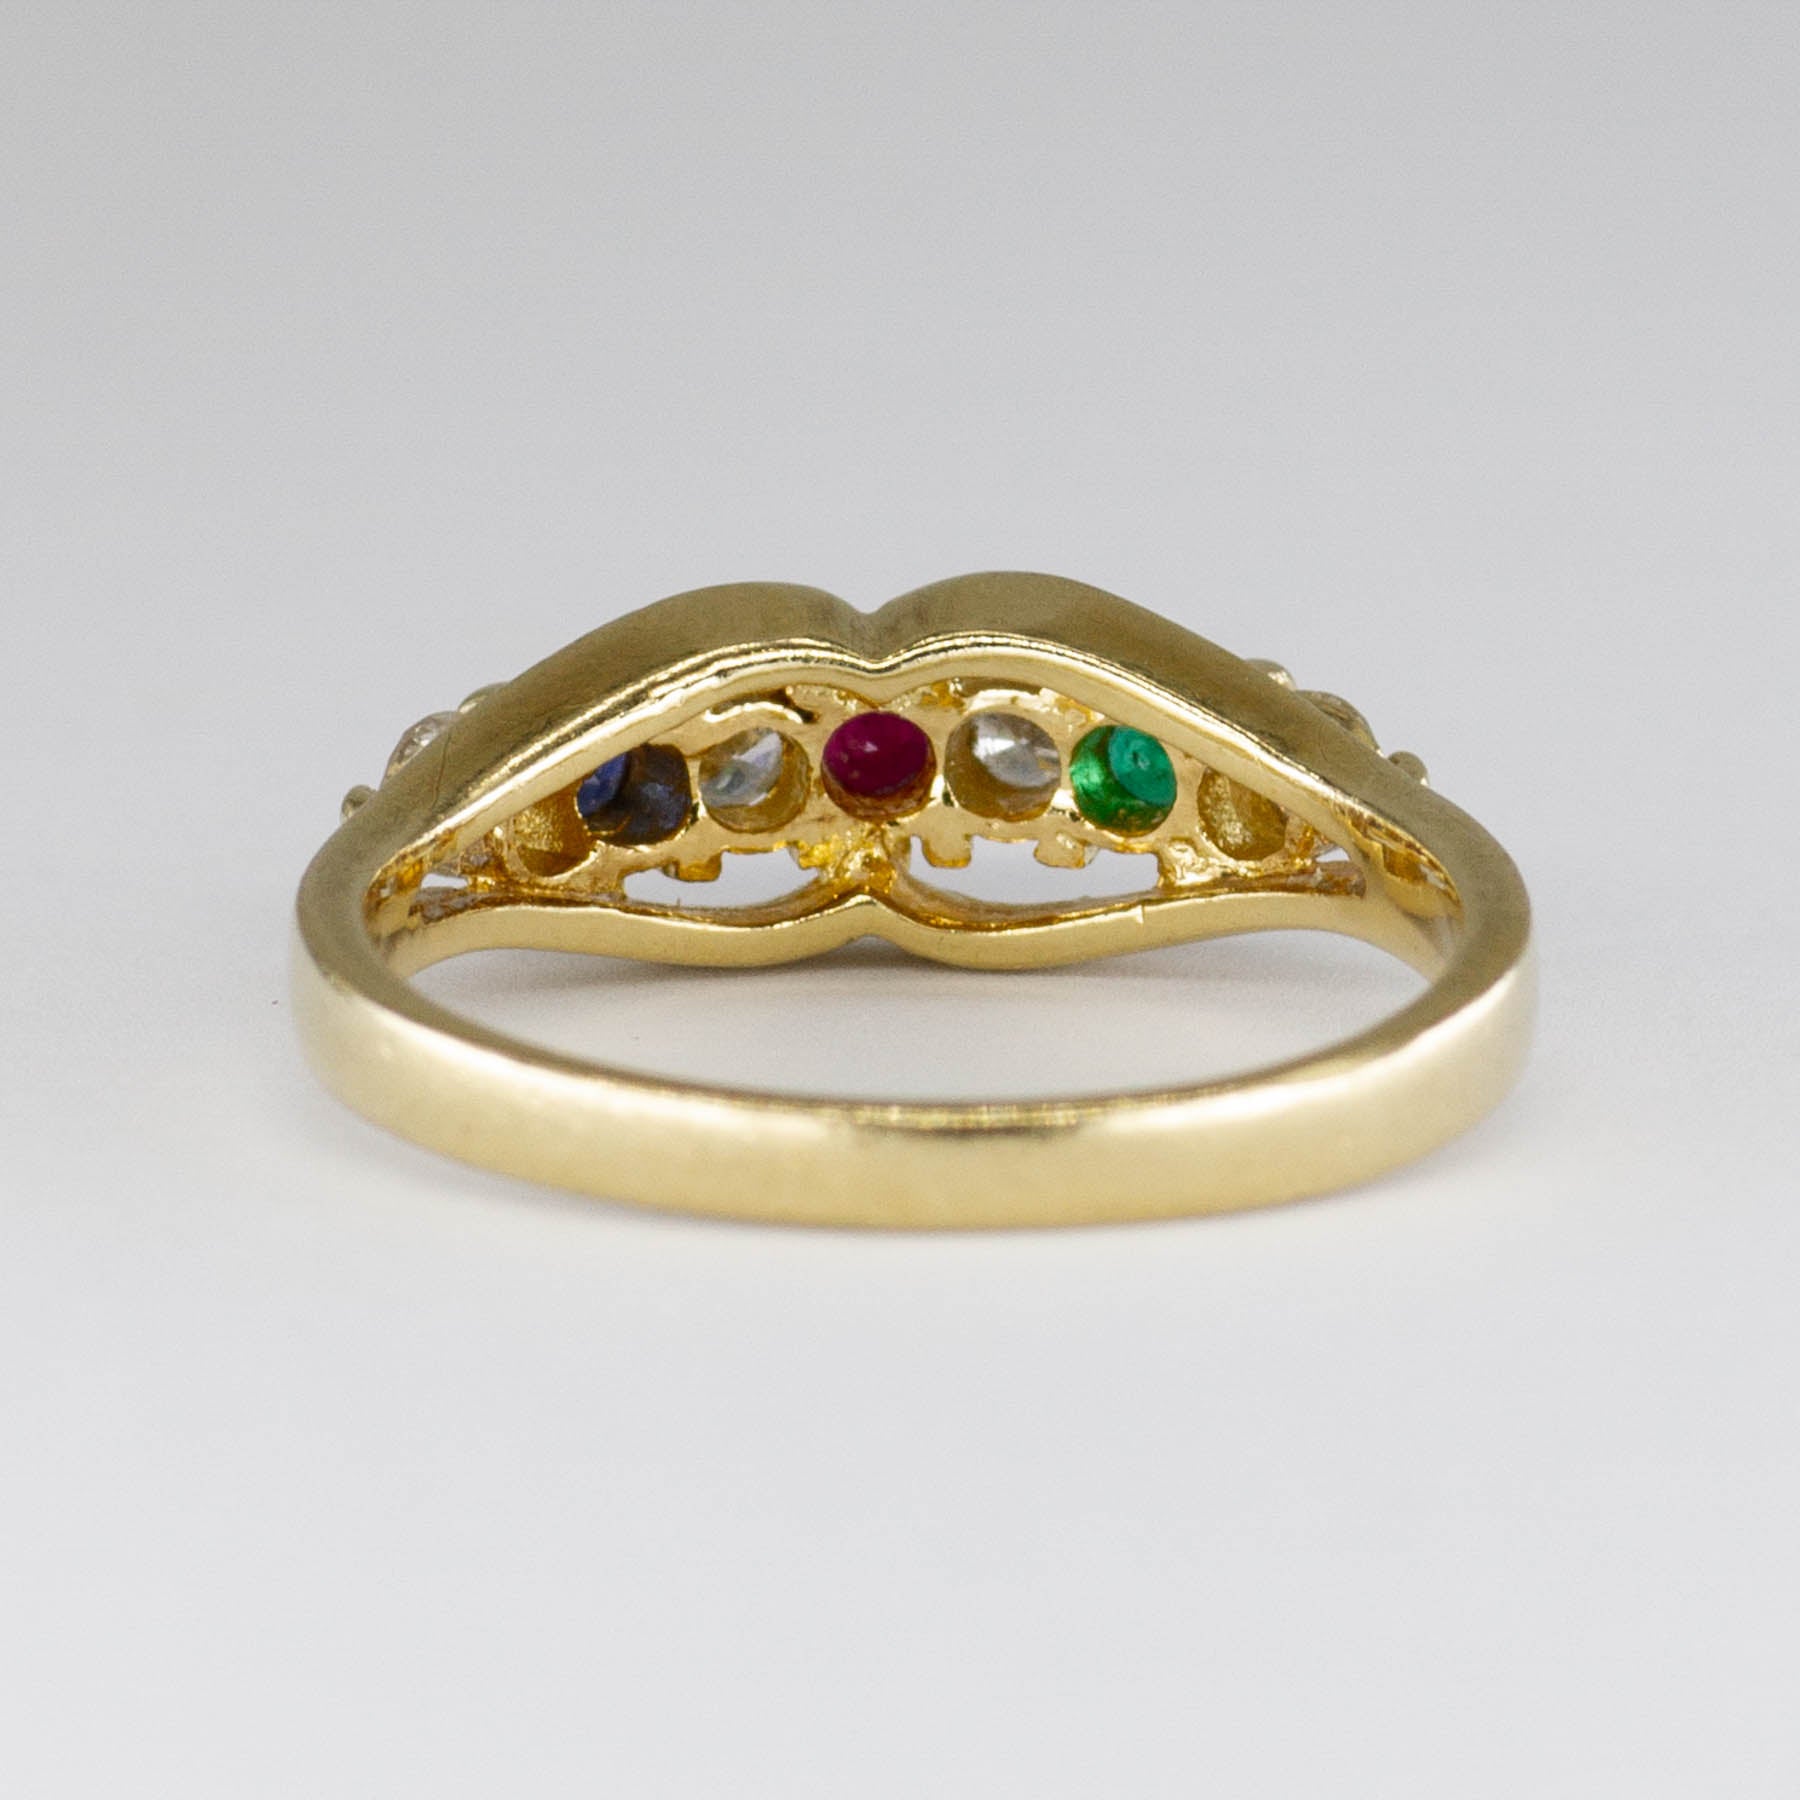 Diamond, Ruby, Sapphire and Emerald 14k Ring | 0.25ctw, 0.18ctw | SZ 5.75|